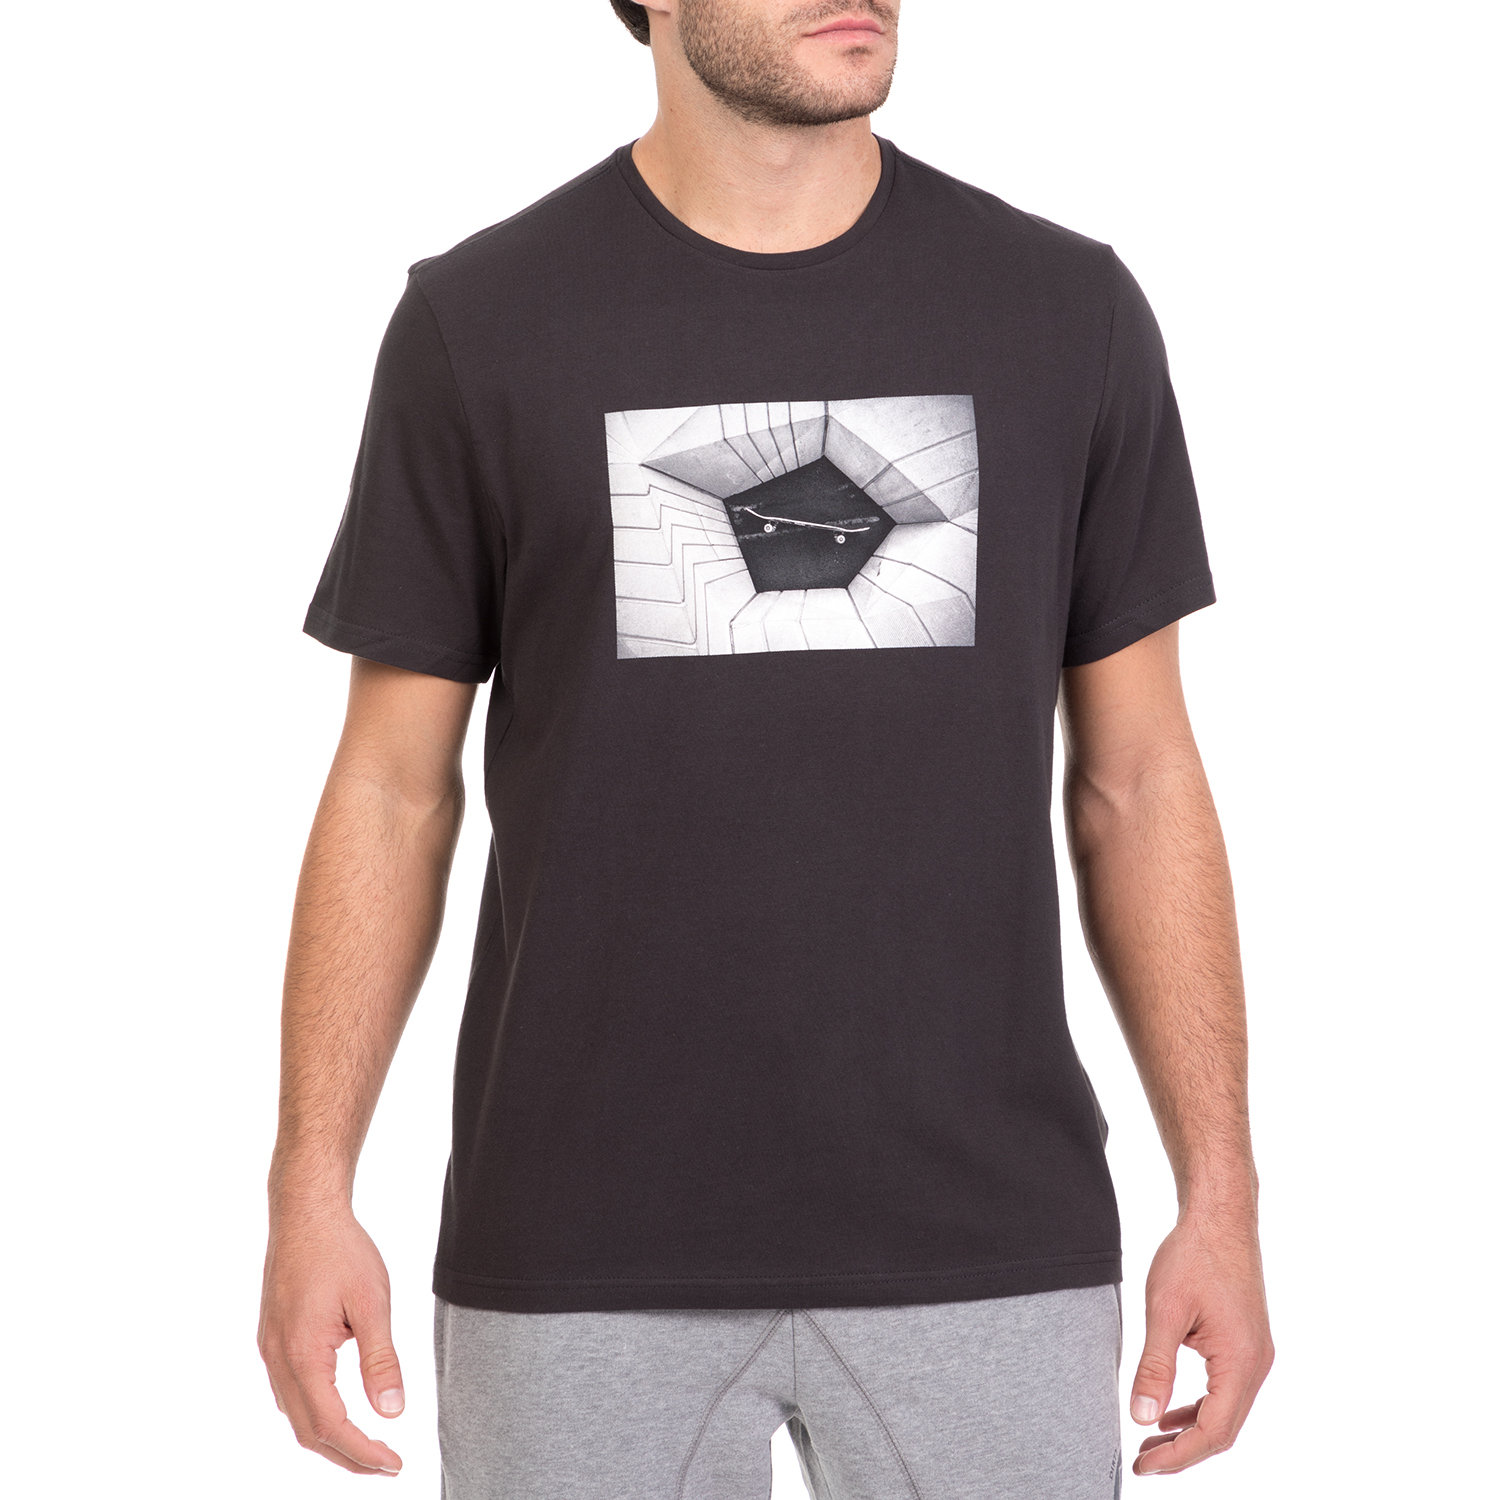 ELEMENT – Ανδρική κοντομάνικη μπλούζα ELEMENT μαύρη με στάμπα 1720241.0-7473